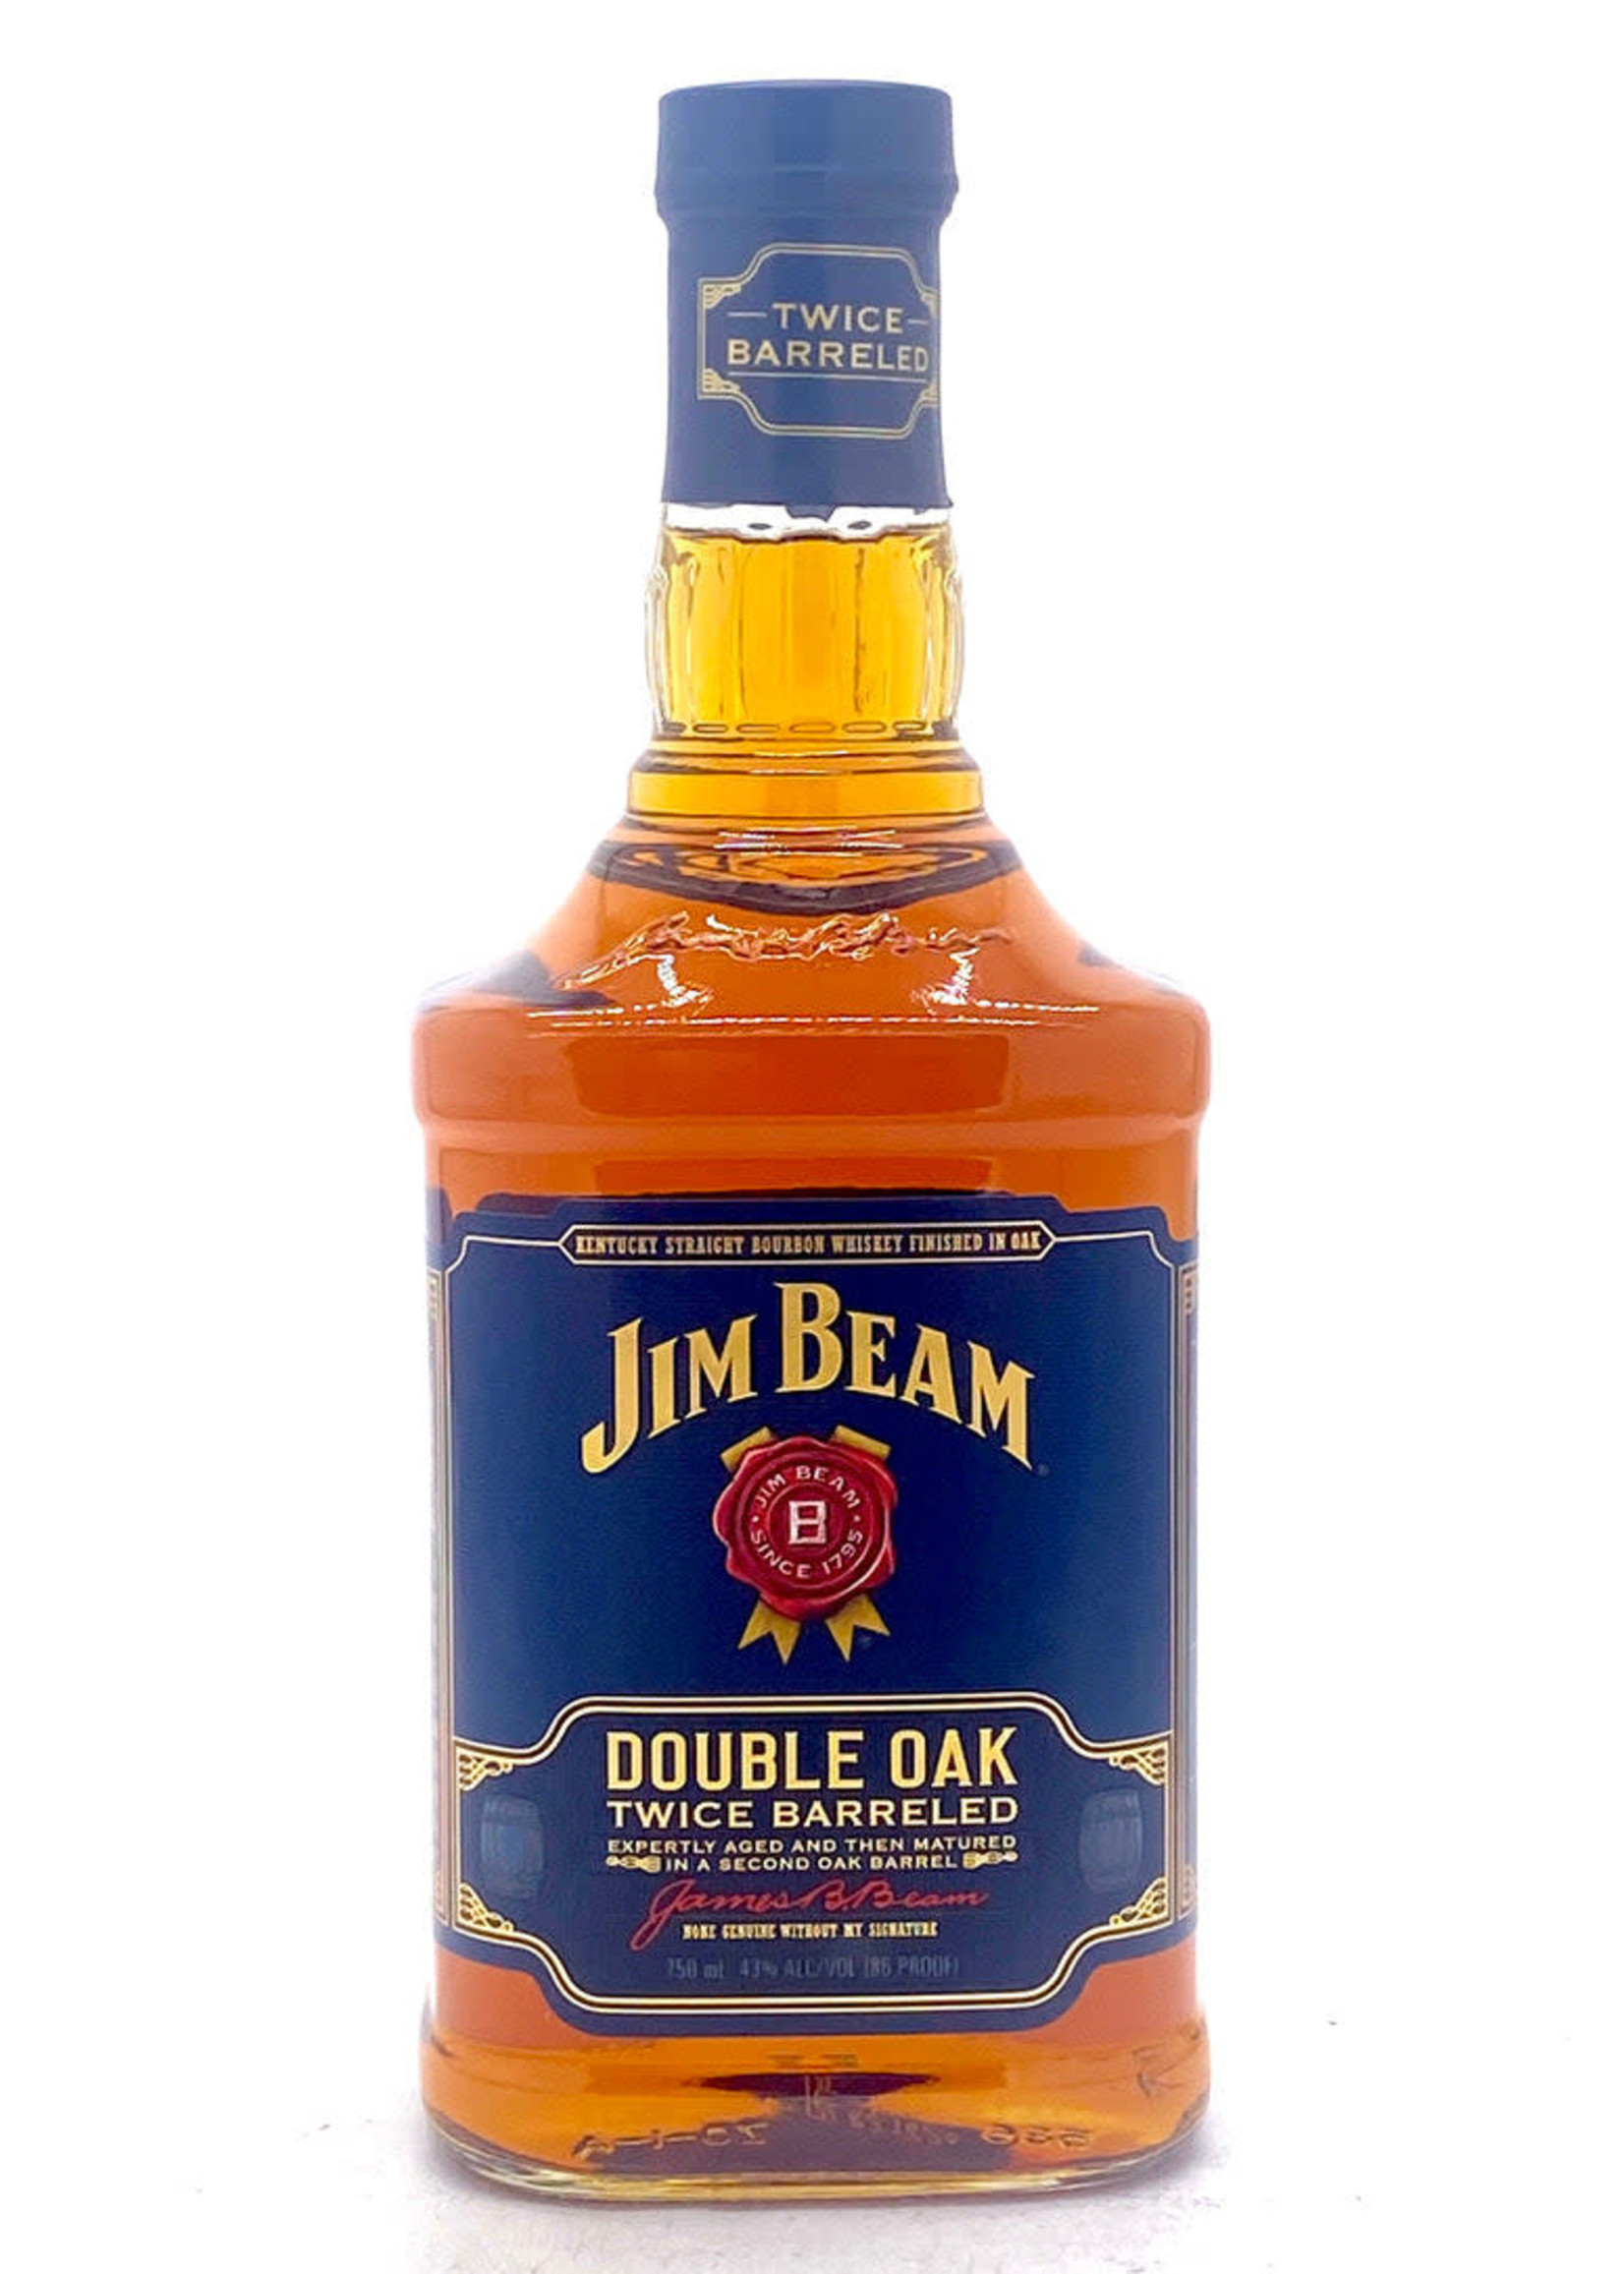 Jim Beam Straight Bourbon Double Oak Twice Barreled 86Proof 750ml